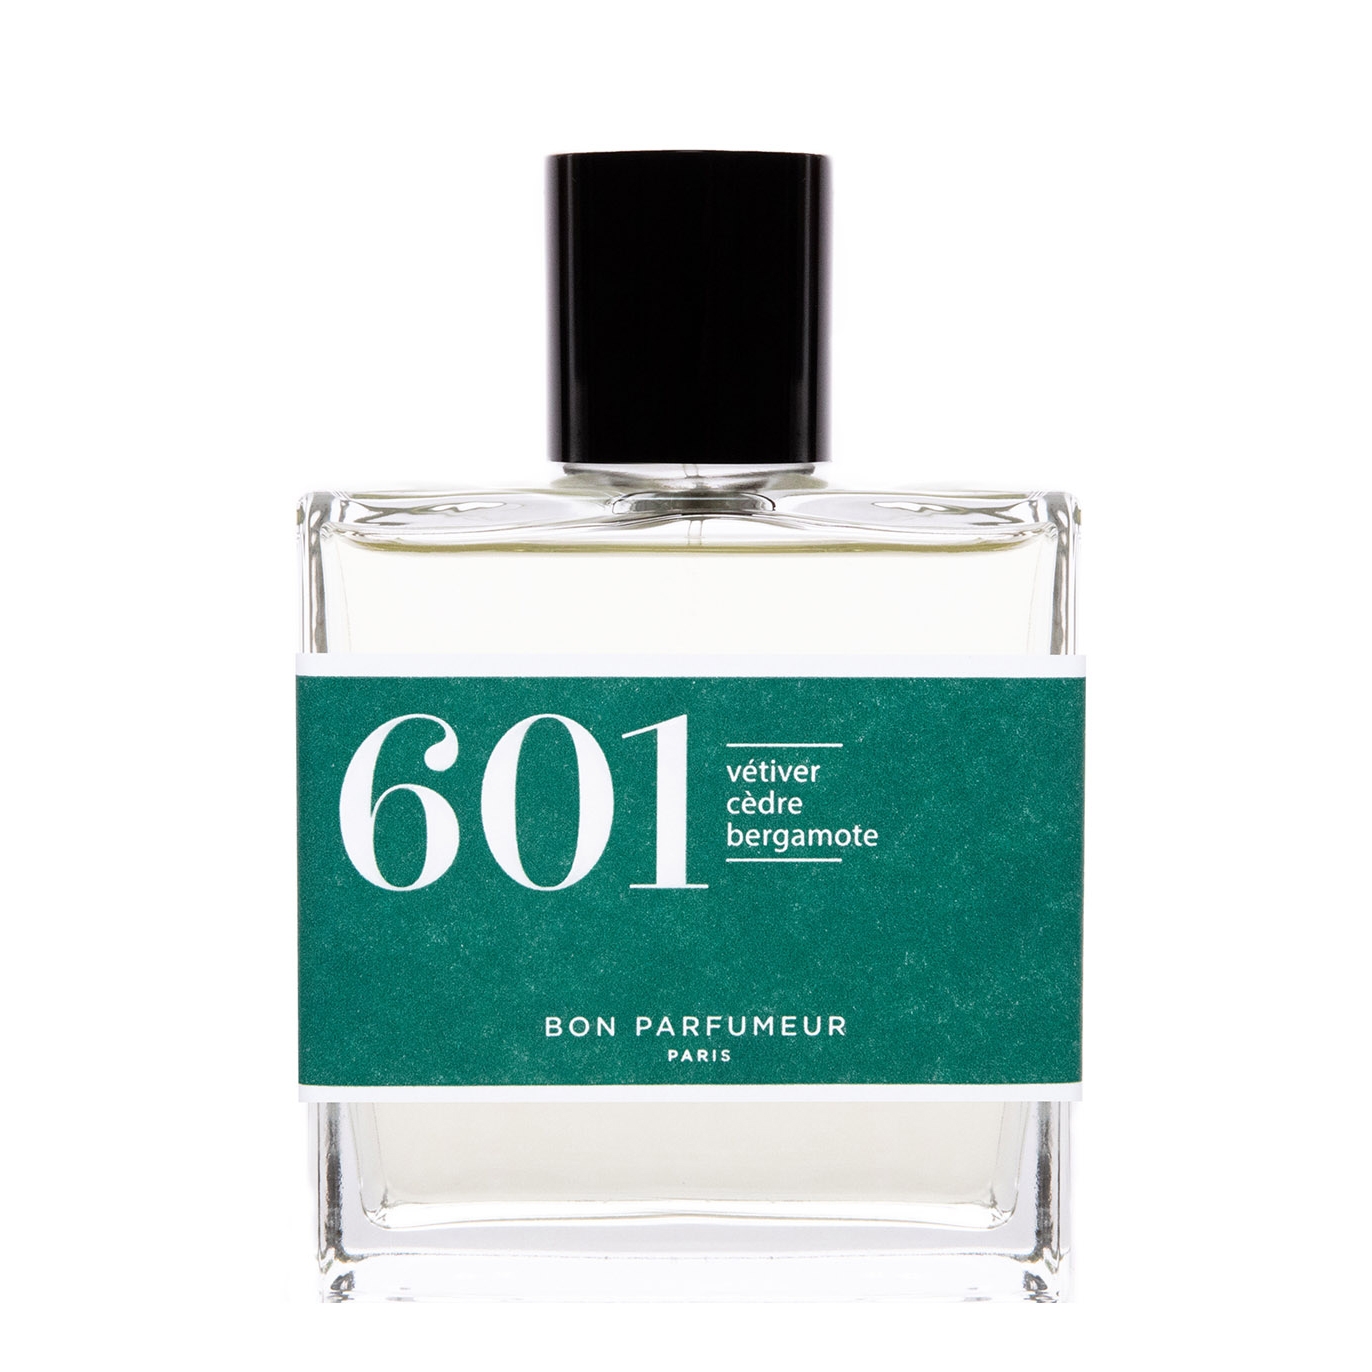 Bon Parfumeur 601 Vetiver, Cedar, Bergamot Eau De Parfum 100ml